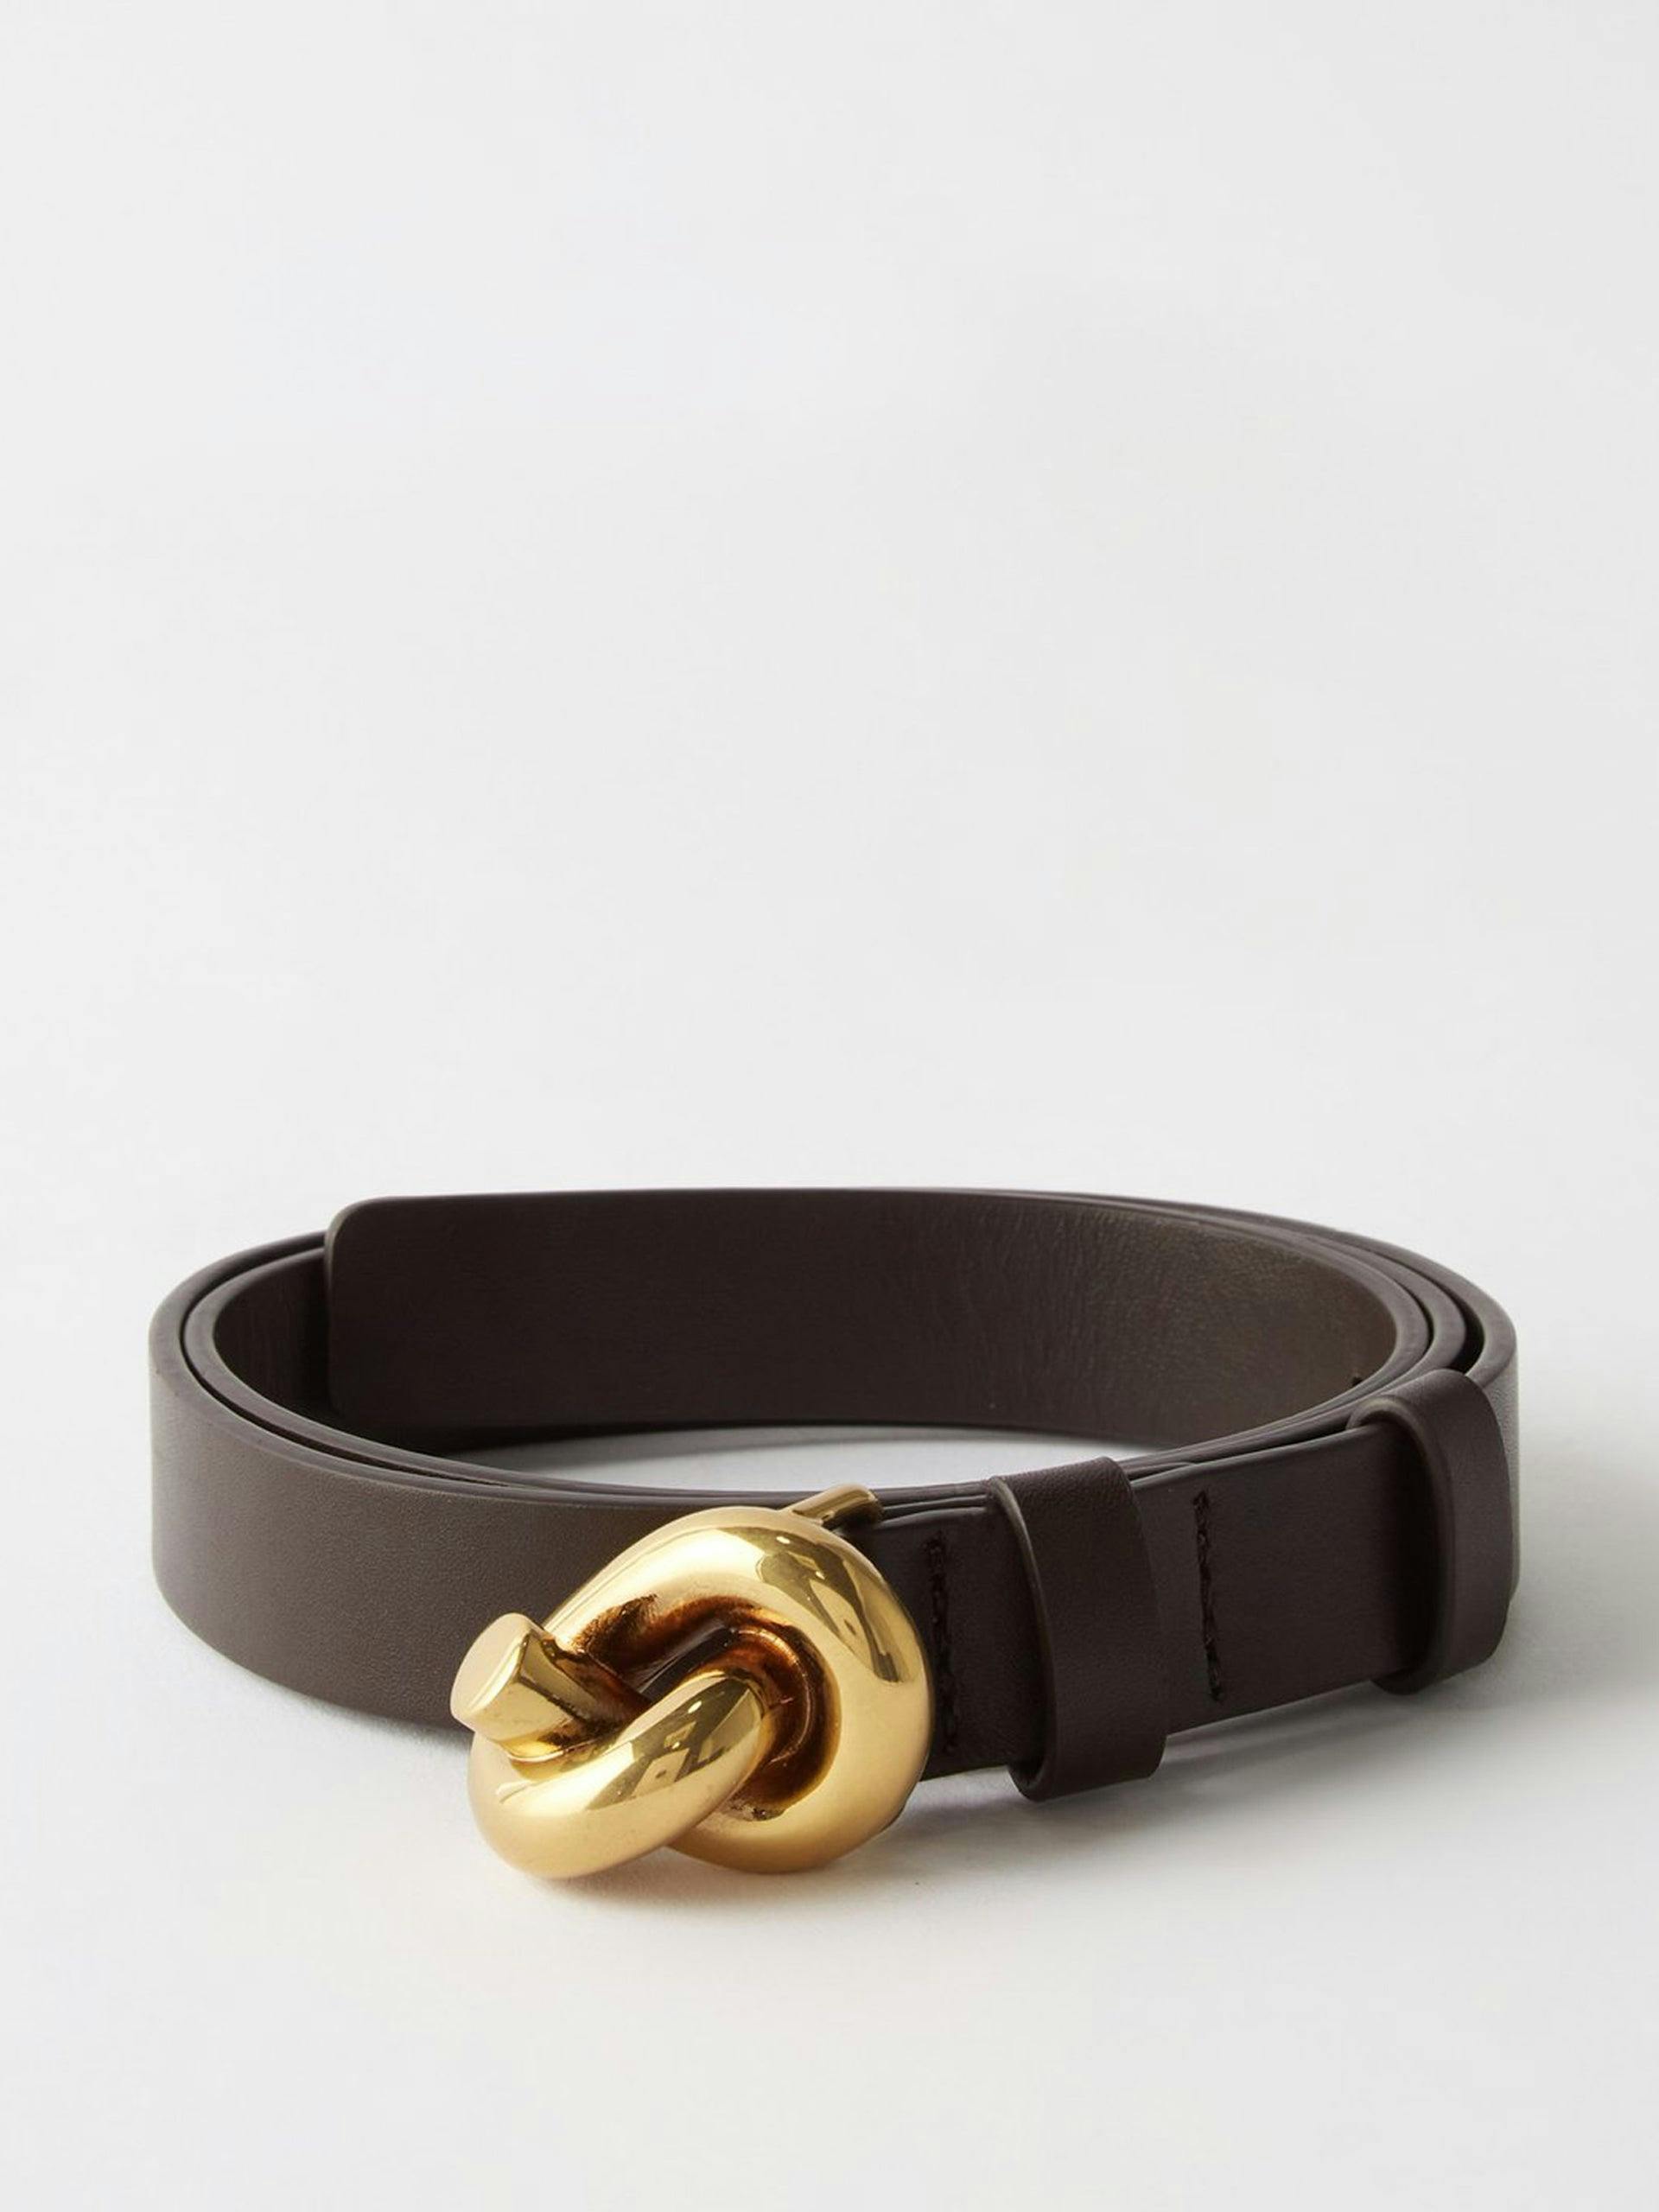 Knot leather belt